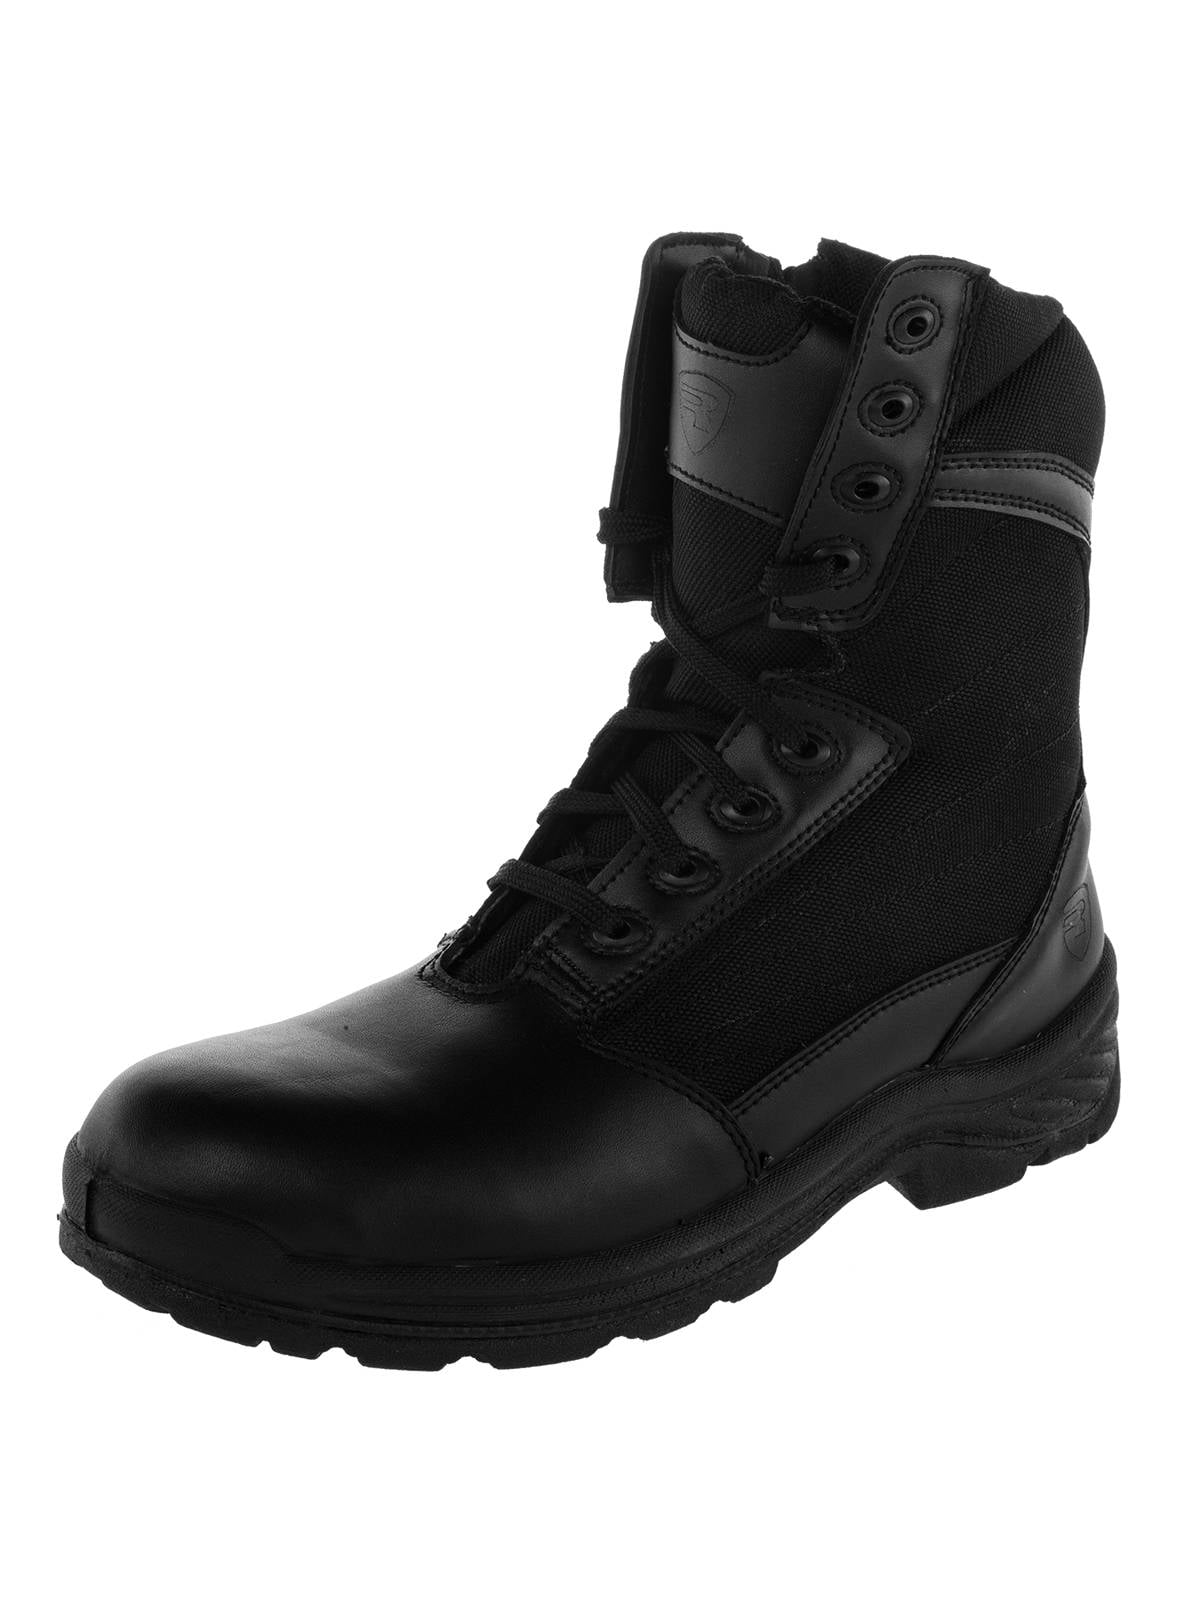 Rucks 8” Men’s Shield Tactical Working Boots Lace Up Side Zipper Soft Toe Black 